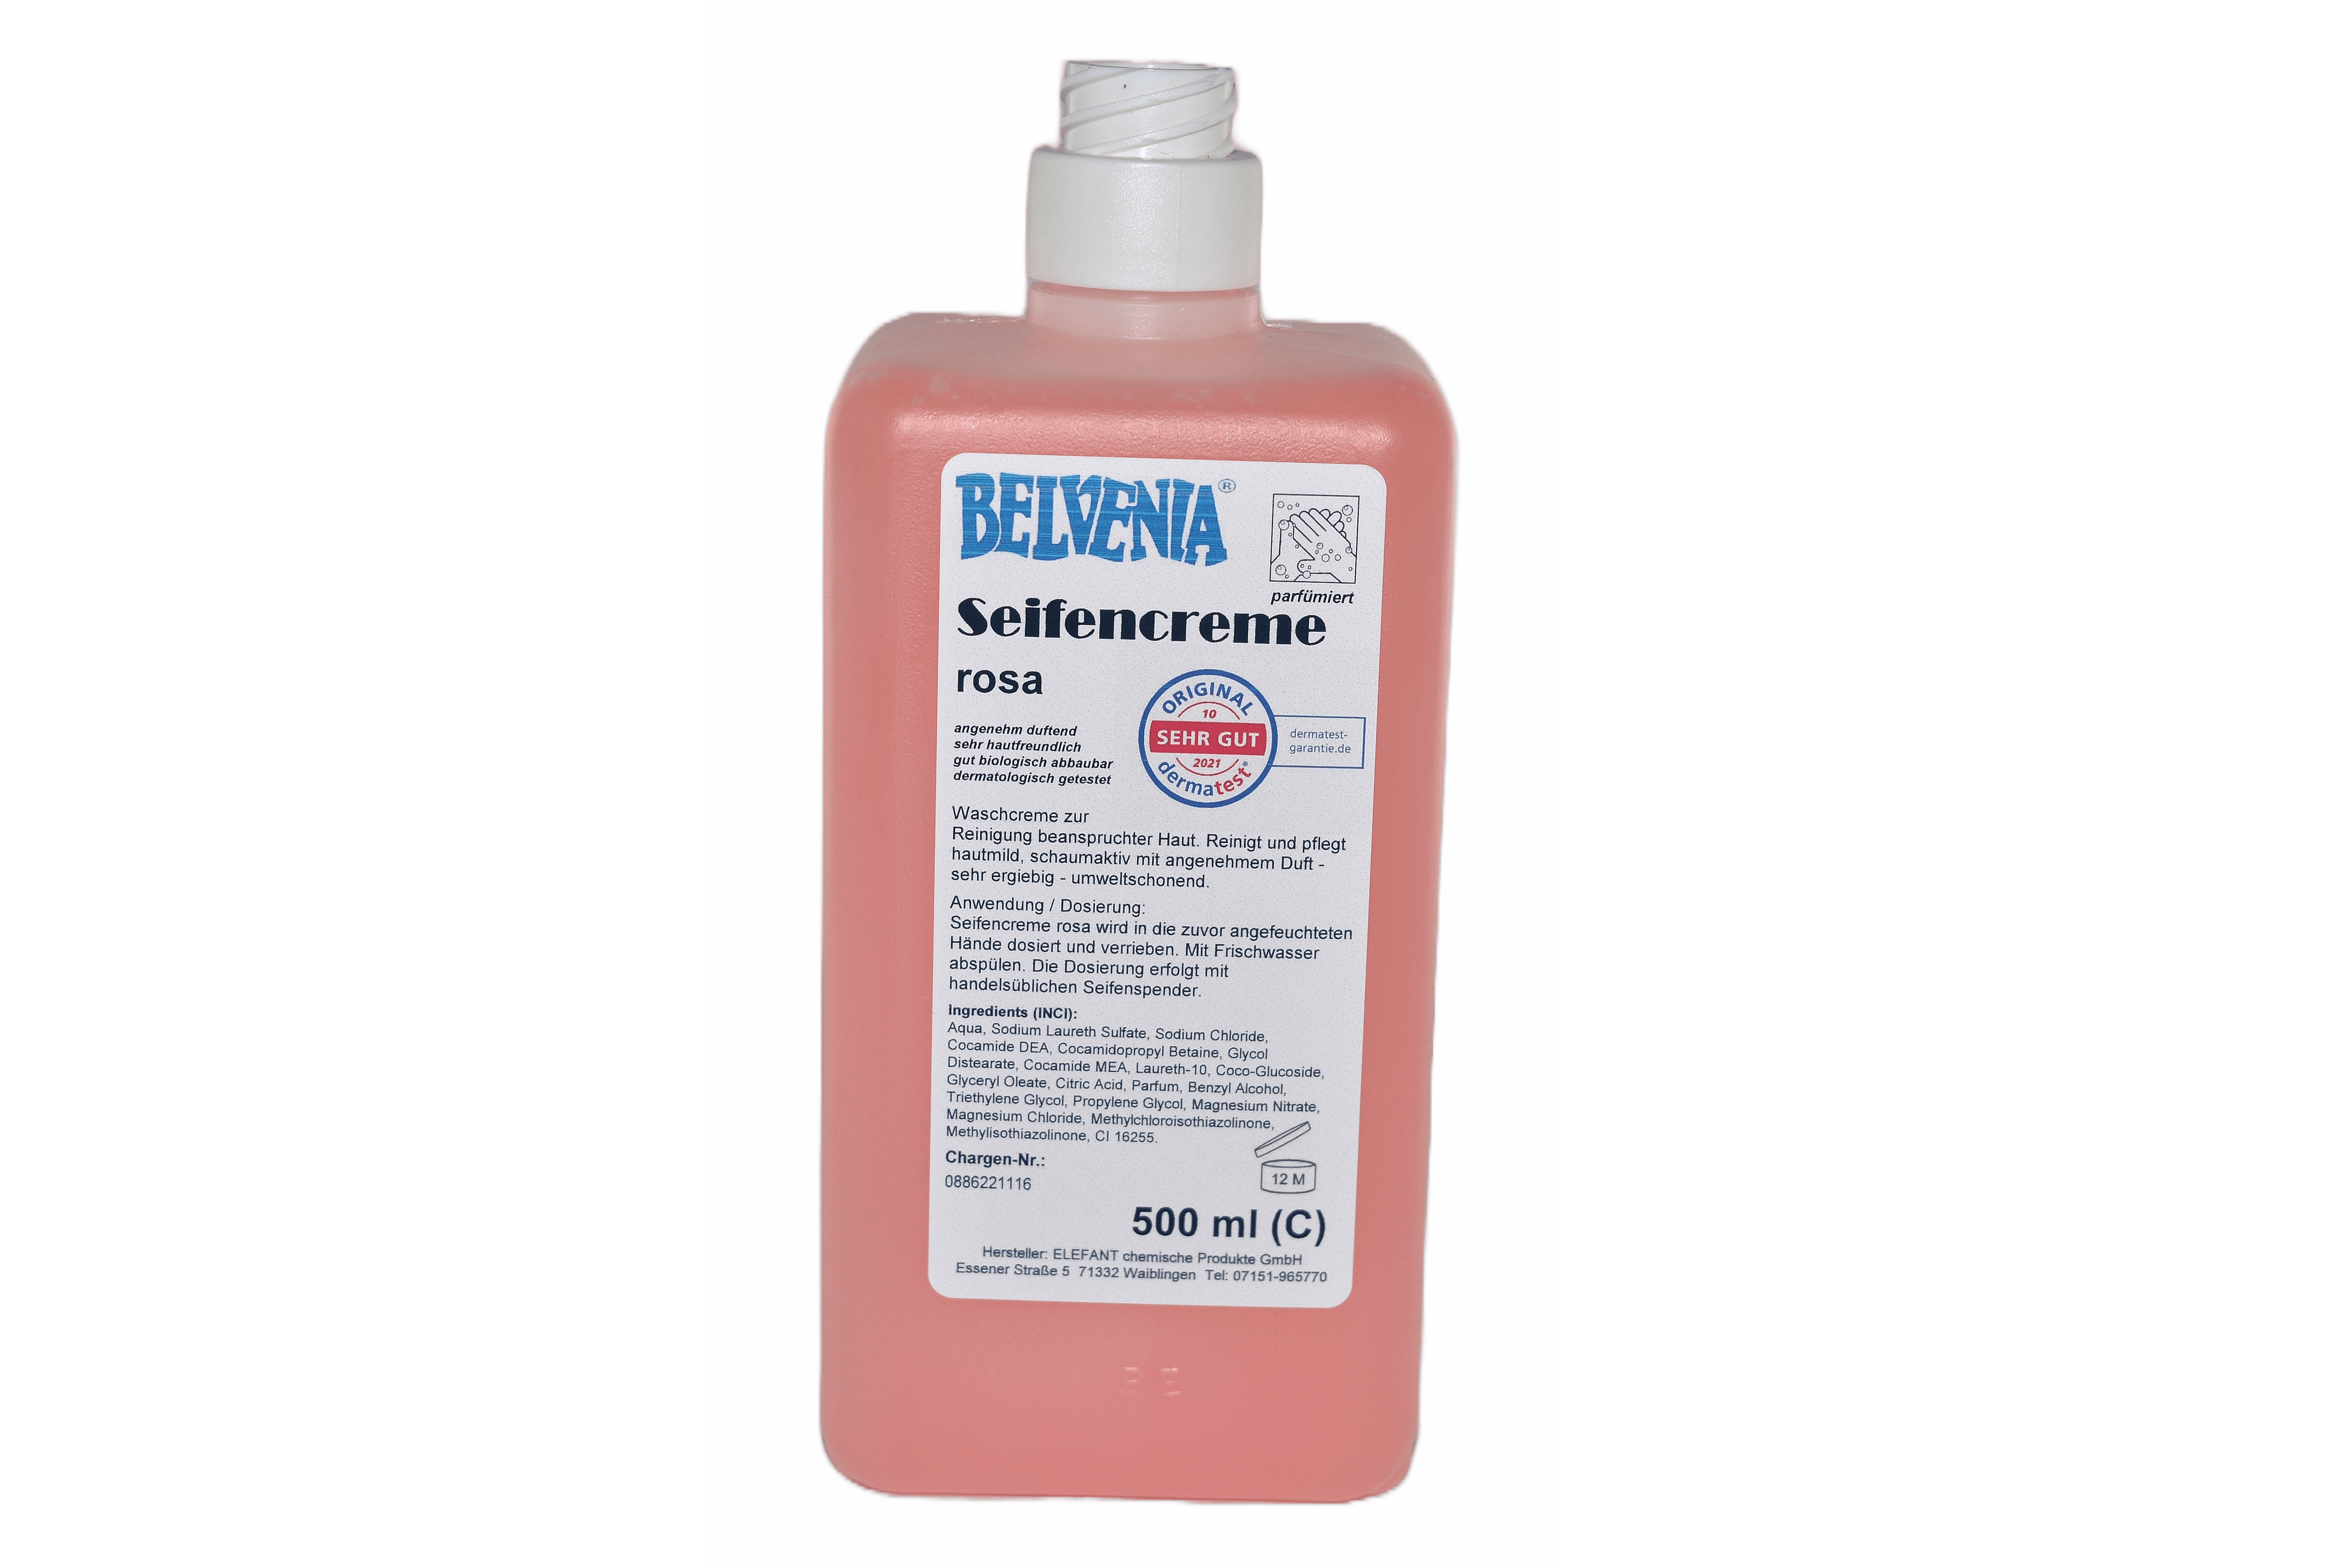 BELVENIA-Cremeseife rosa 500 ml Spenderflasche (C) Karton mit 12x500 ml